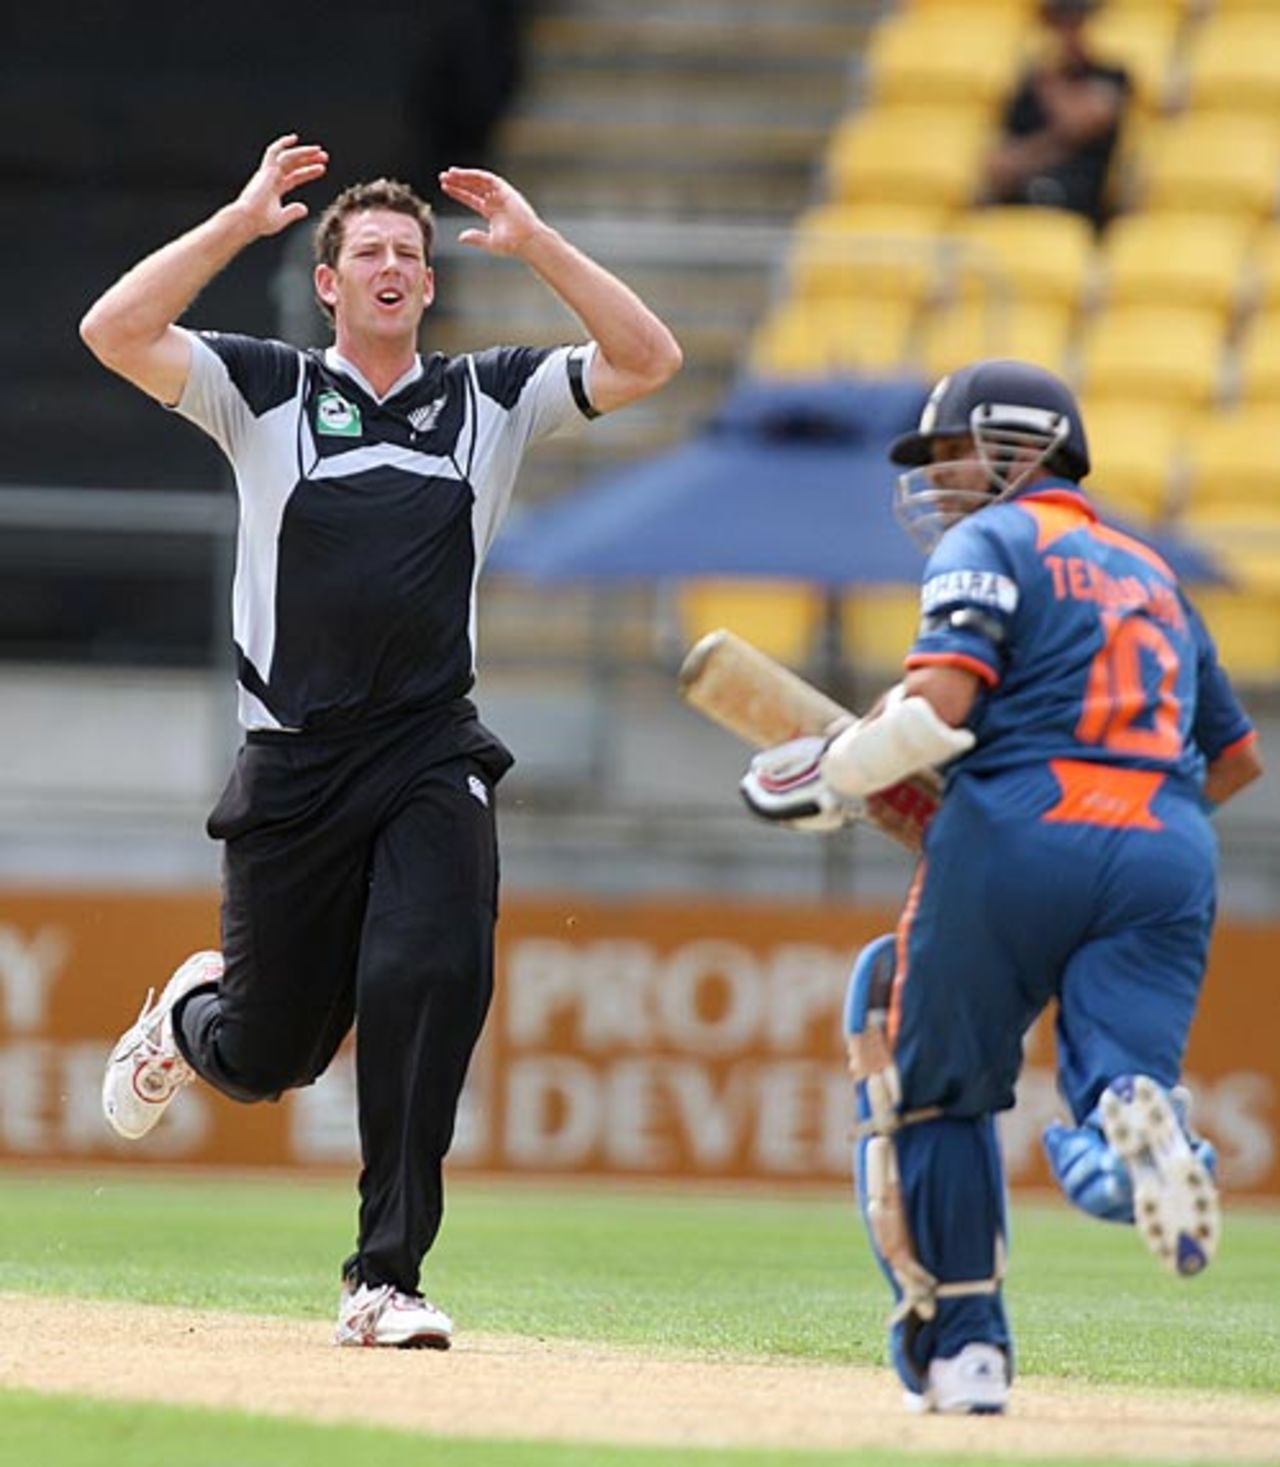 Ian Butler rues a close call against Sachin Tendulkar, New Zealand v India, 2nd ODI, Westpac Stadium, Wellington, March 6, 2009